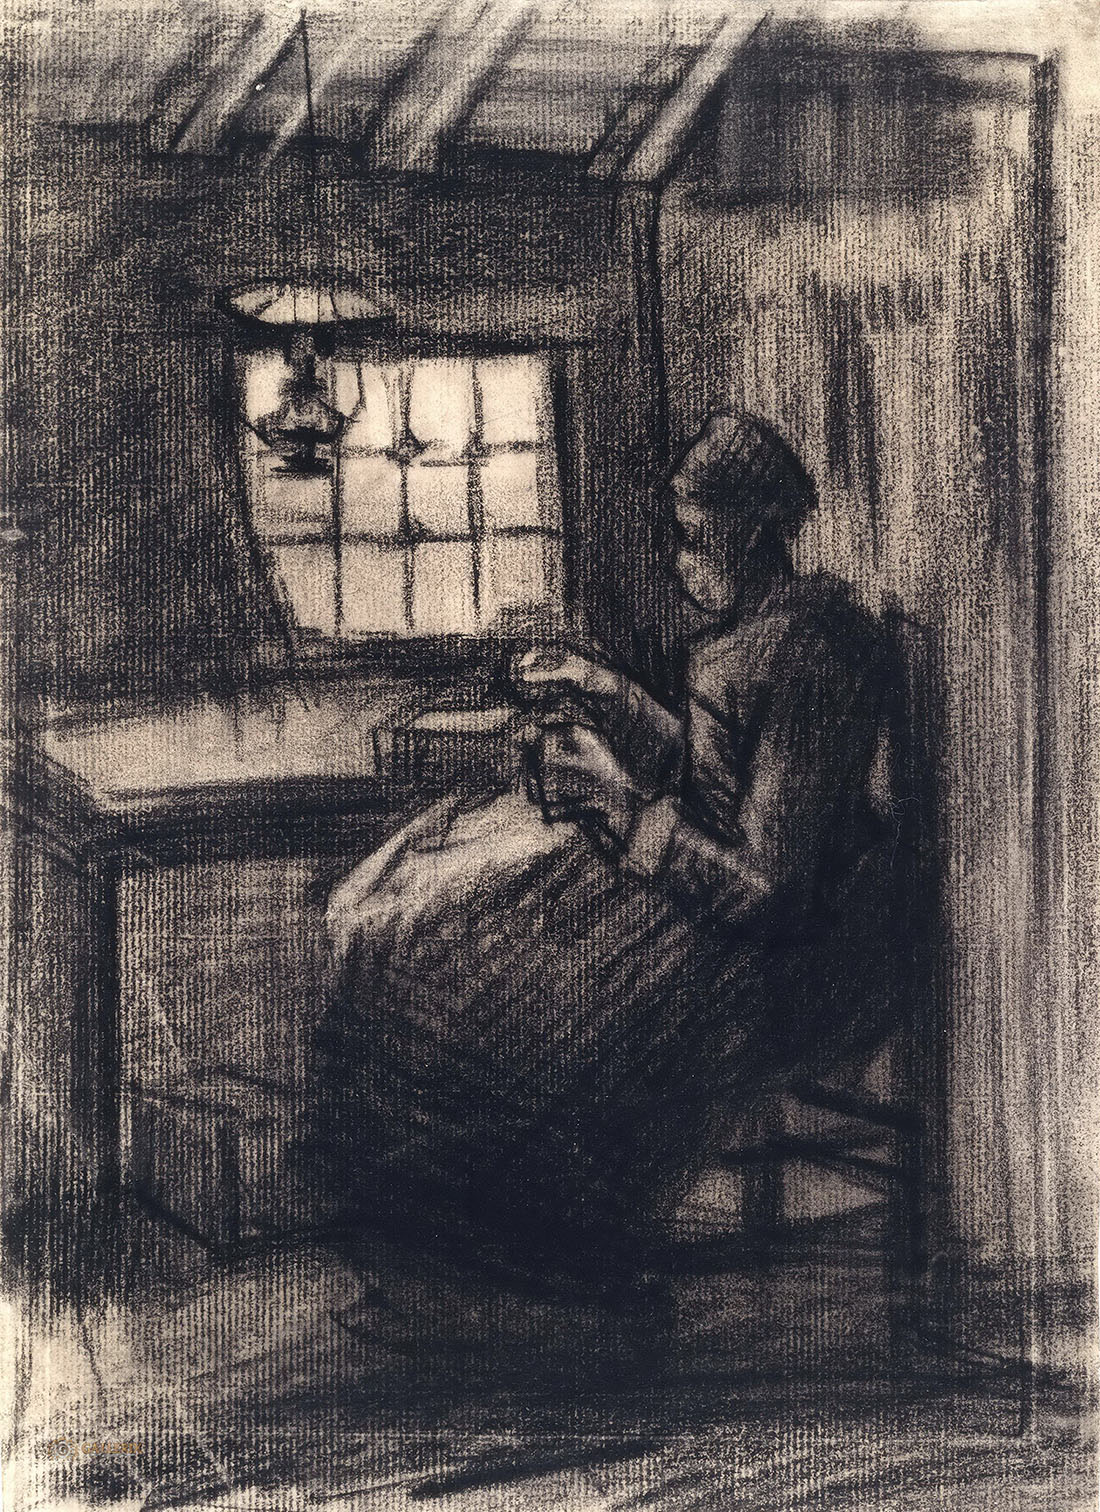 Винсент Ван Гог. "Шьющая женщина". 1885. Музей Ван Гога, Амстердам.